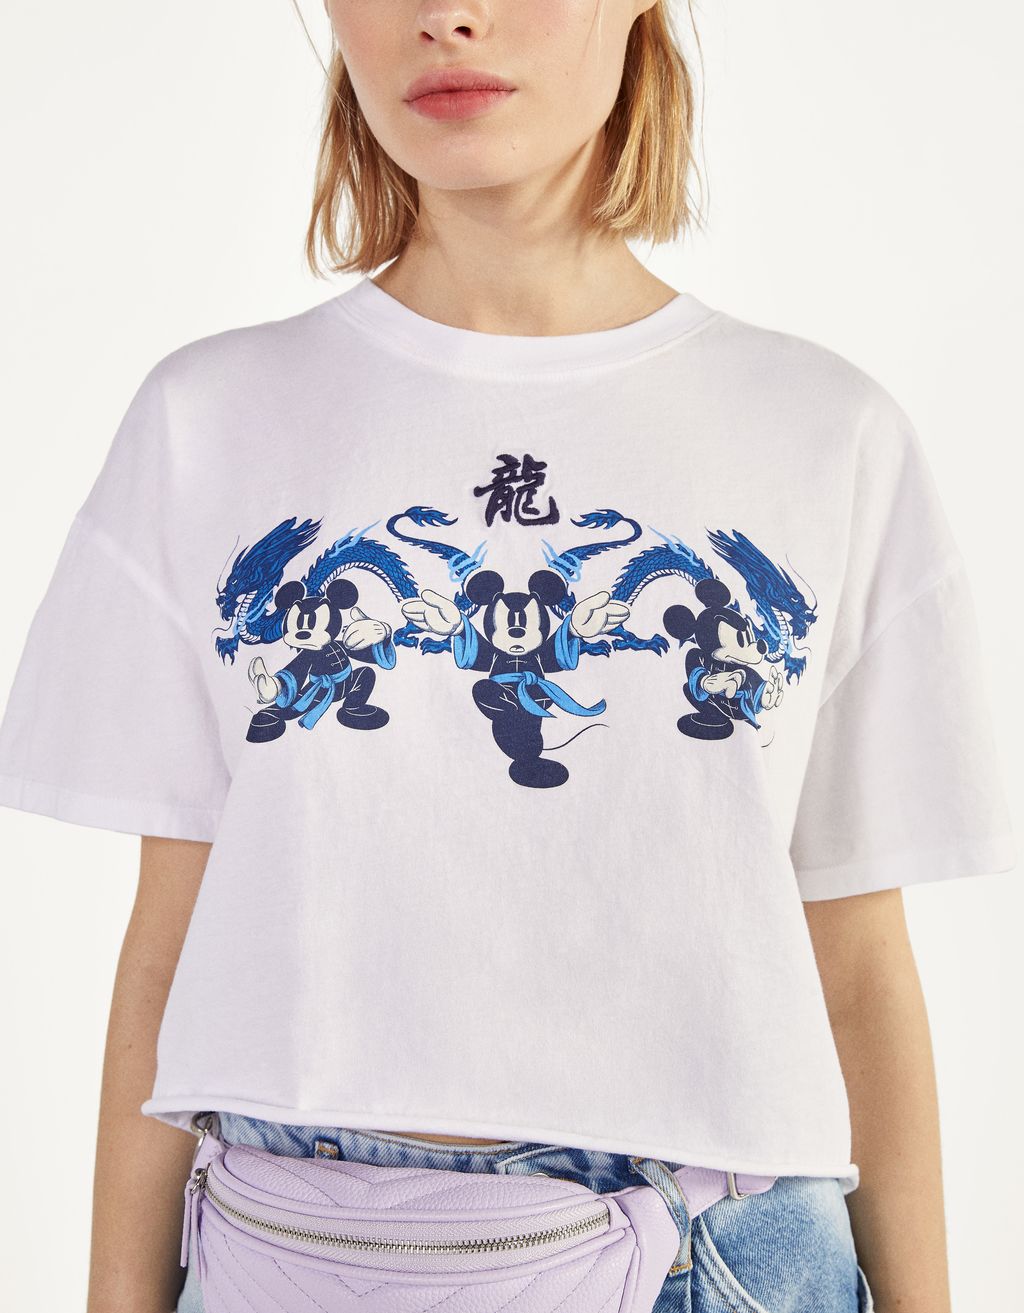 mickey mouse print shirt